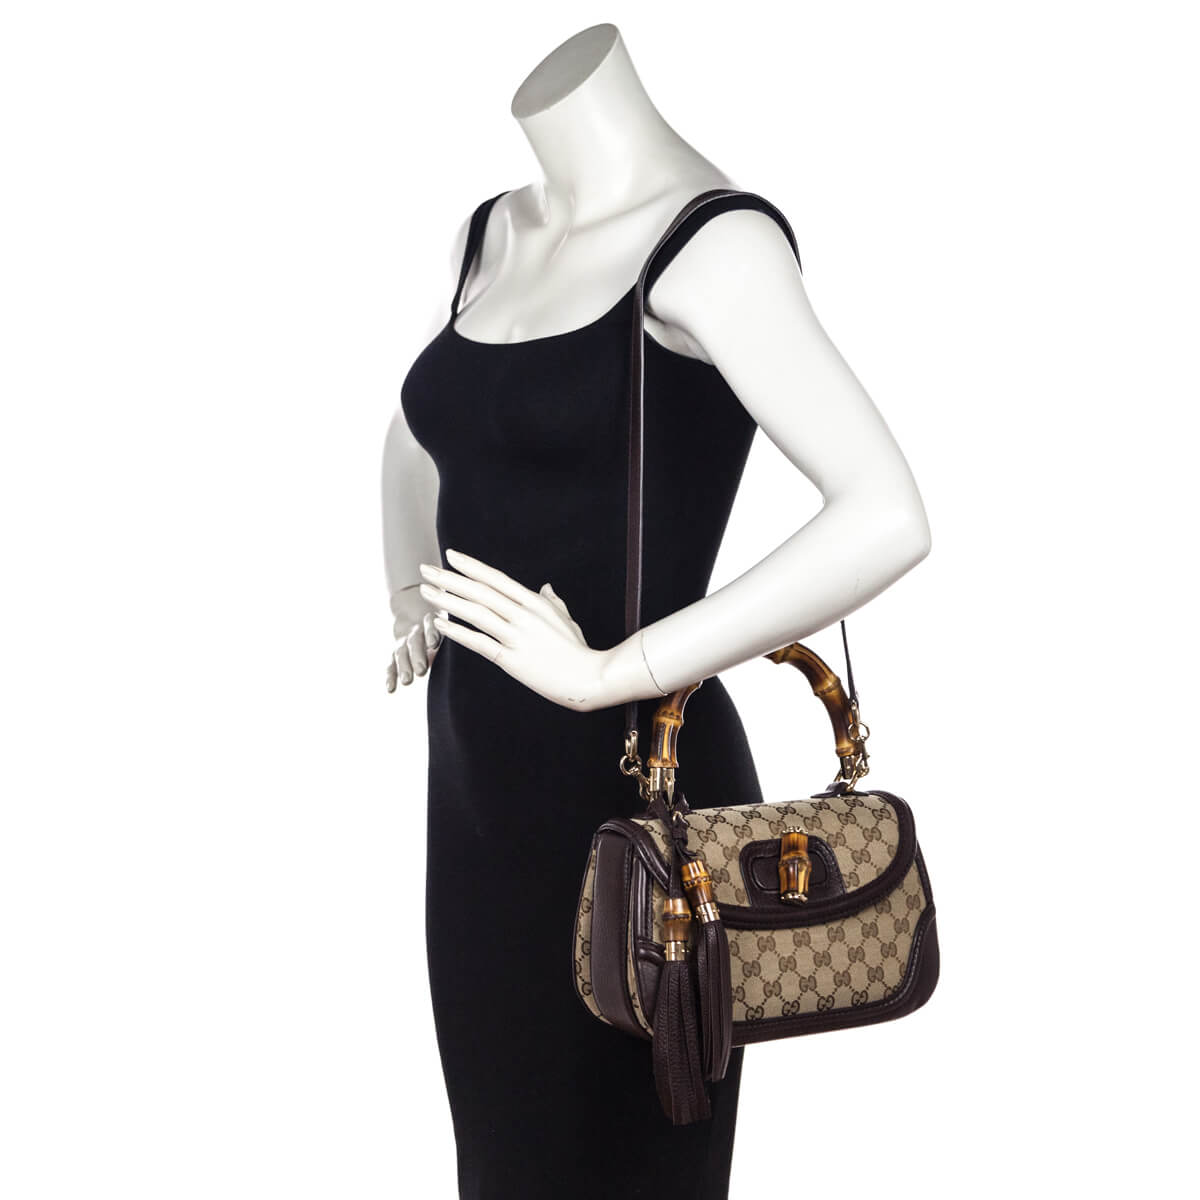 Gucci Brown GG Monogram Medium Bamboo Top Handle Bag - Love that Bag etc - Preowned Authentic Designer Handbags & Preloved Fashions